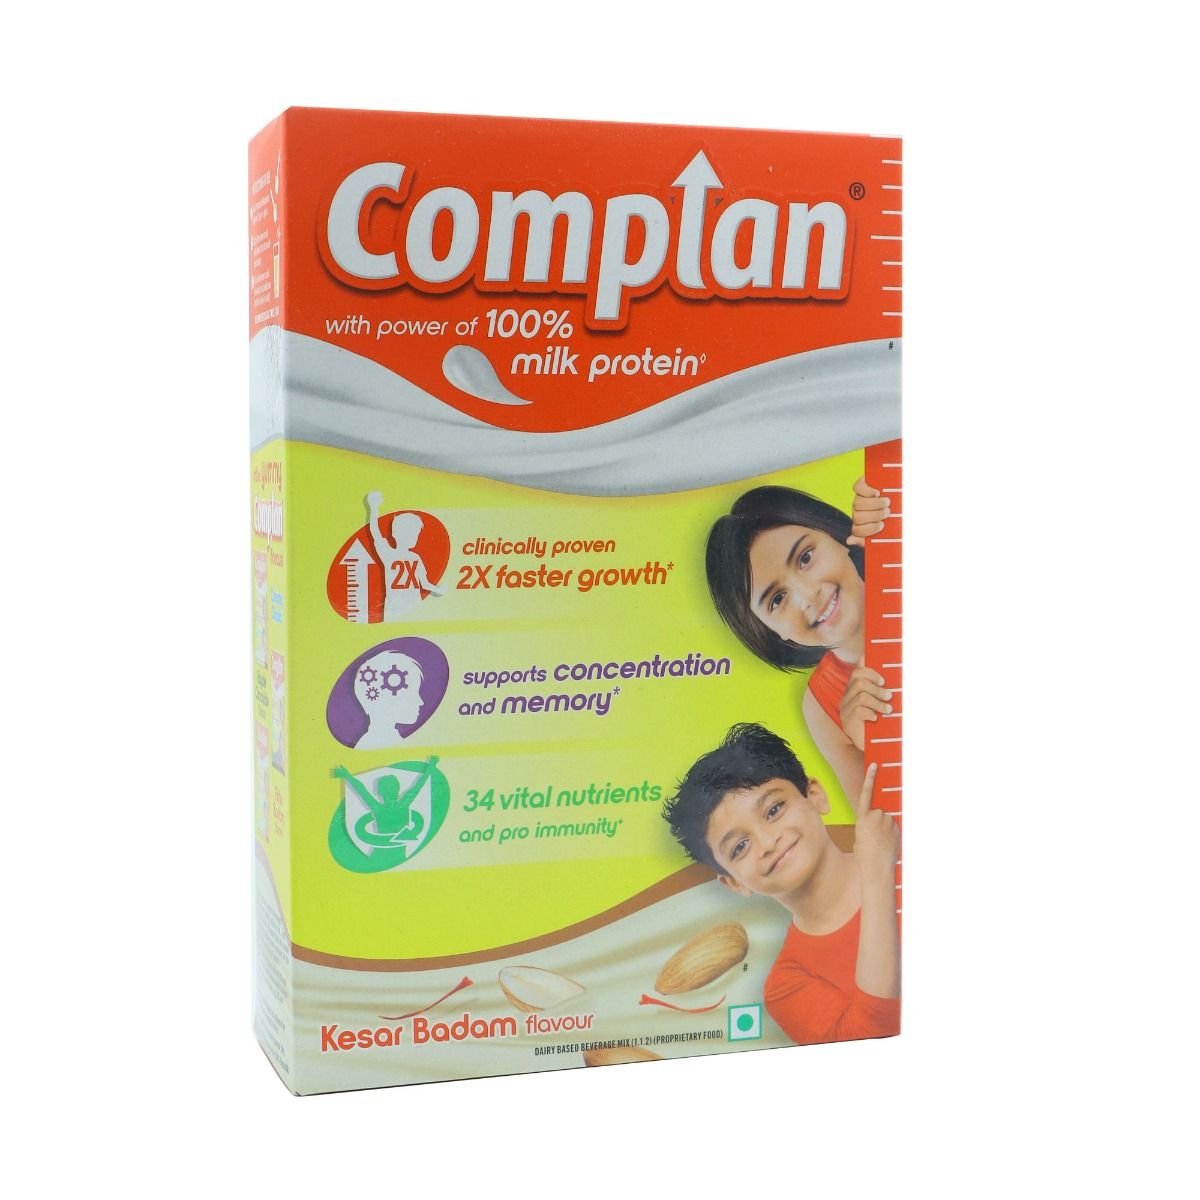 Complan Kesar Badam Flavoured Health & Nutrition Drink, 500 gm Refill Pack, Pack of 1 